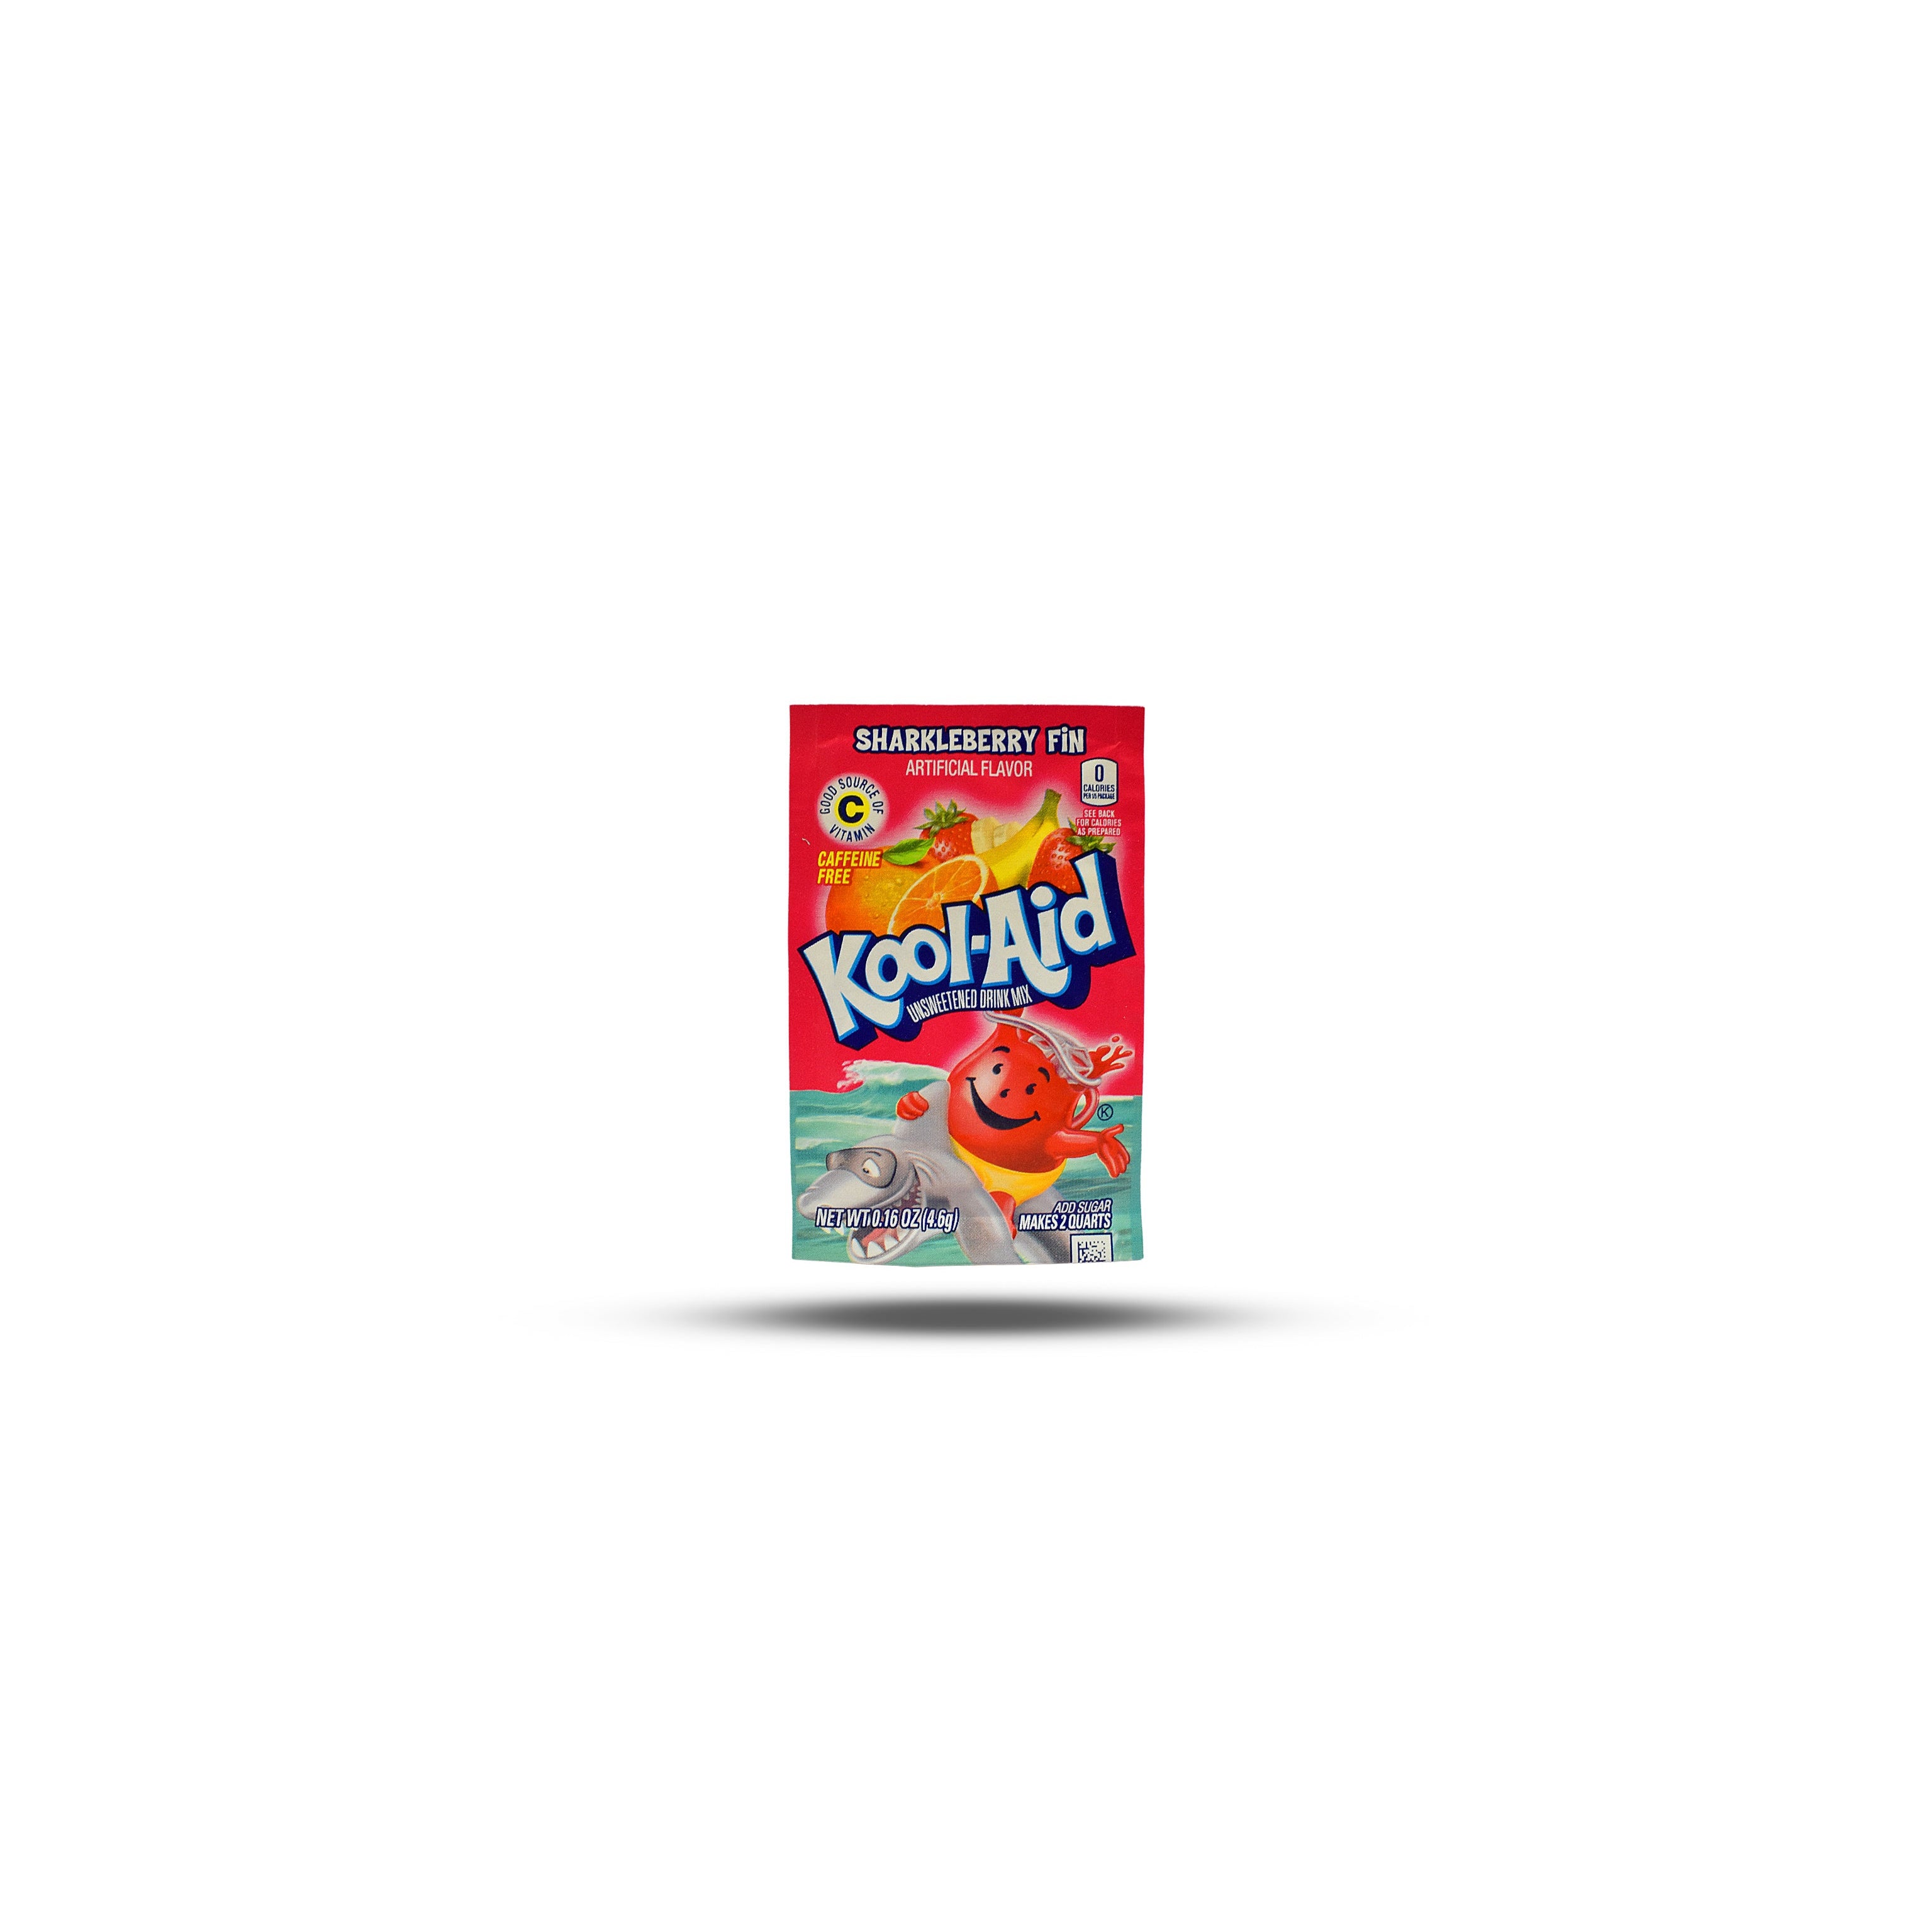 Kool-Aid Sharkleberry Fin Artificial Flavour 4,6g-Kraft Heinz Food Company-SNACK SHOP AUSTRIA